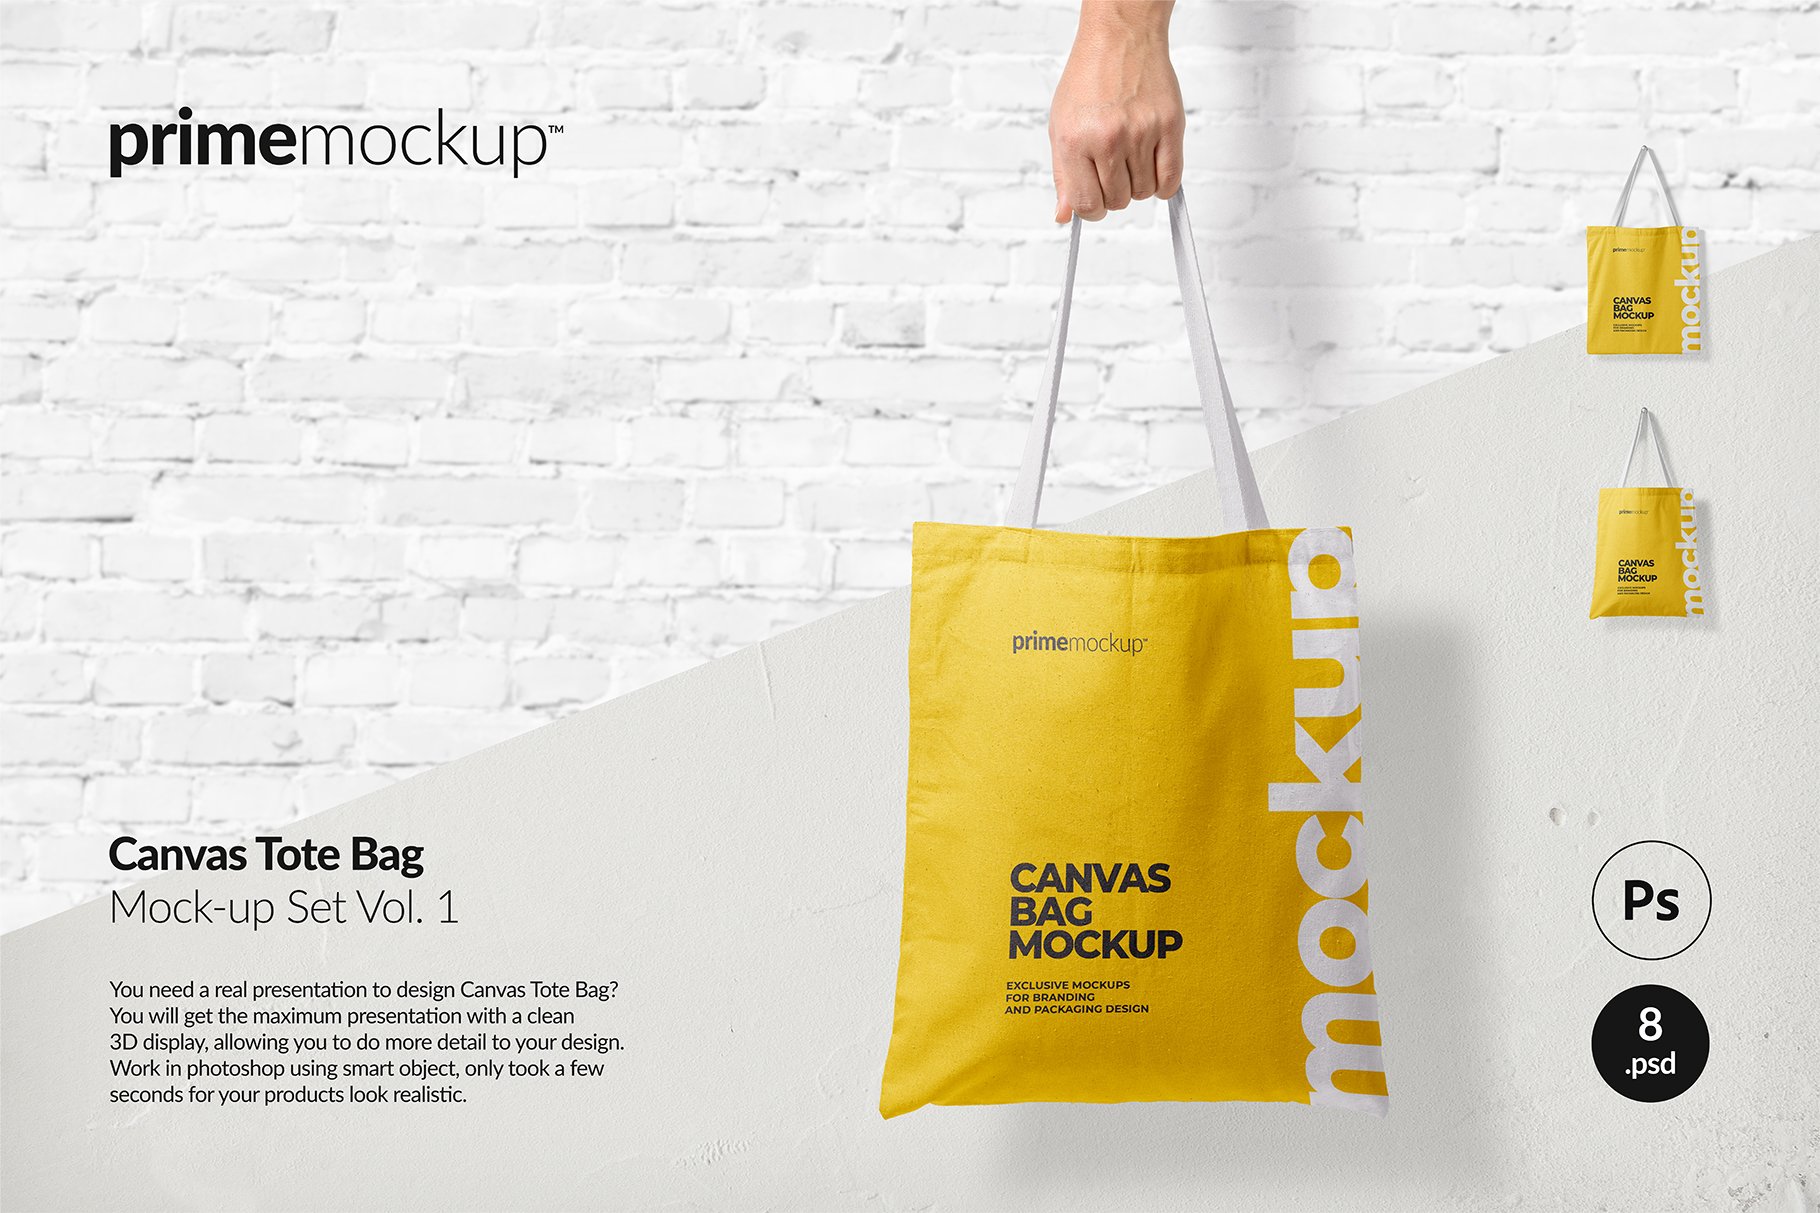 Canvas Tote Bag Mockup Set Vol.1 cover image.